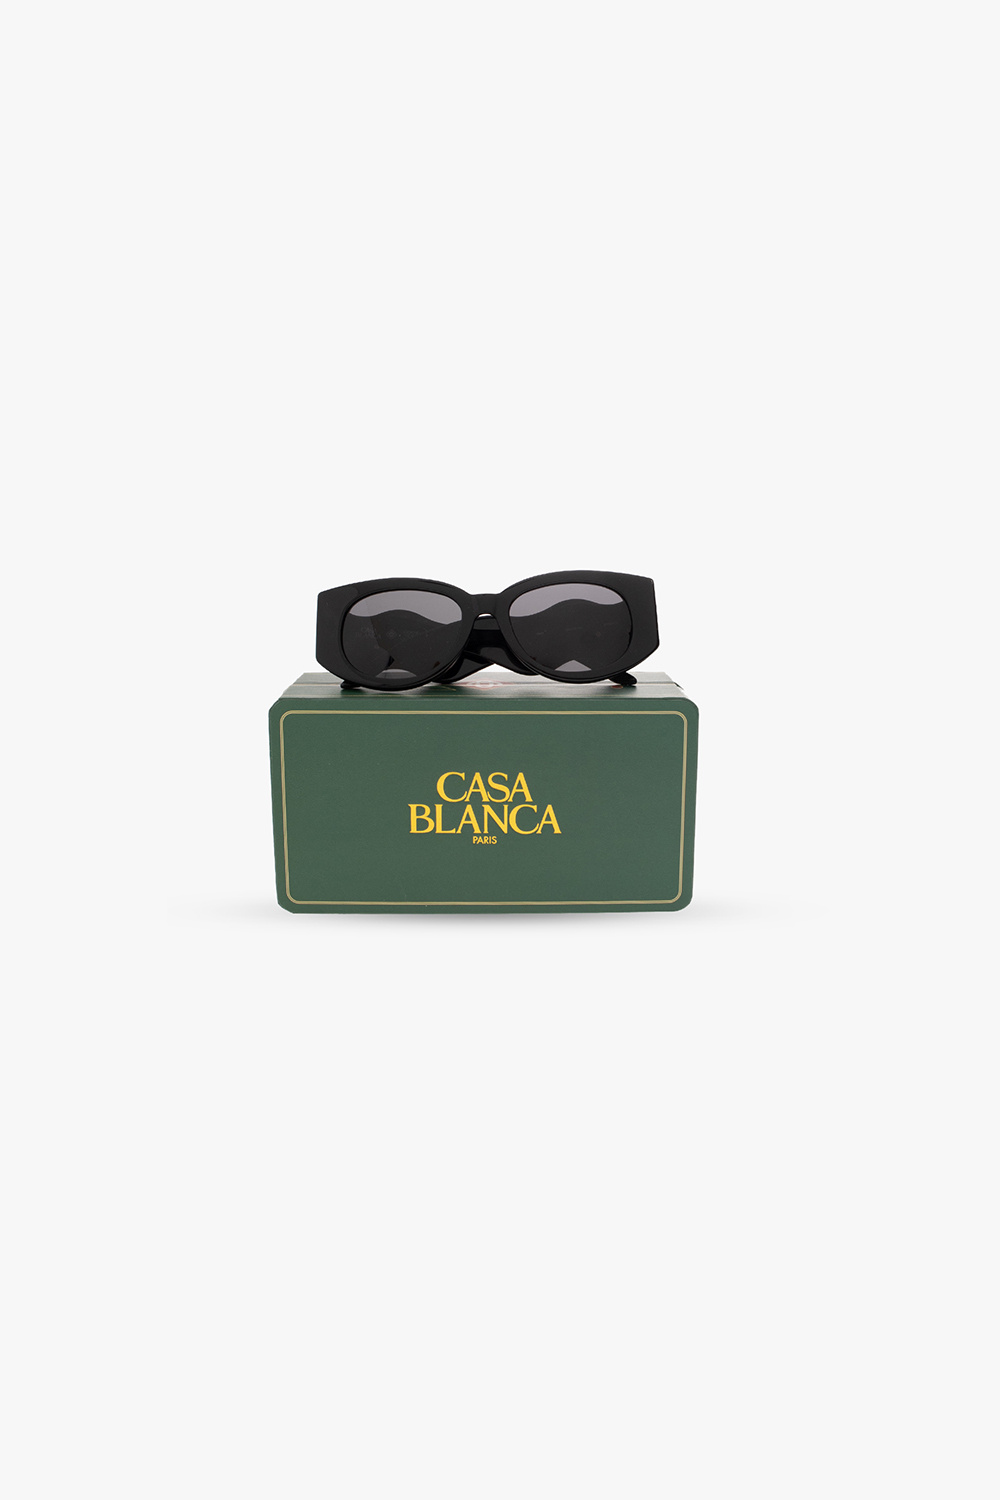 Casablanca Protections frame sunglasses